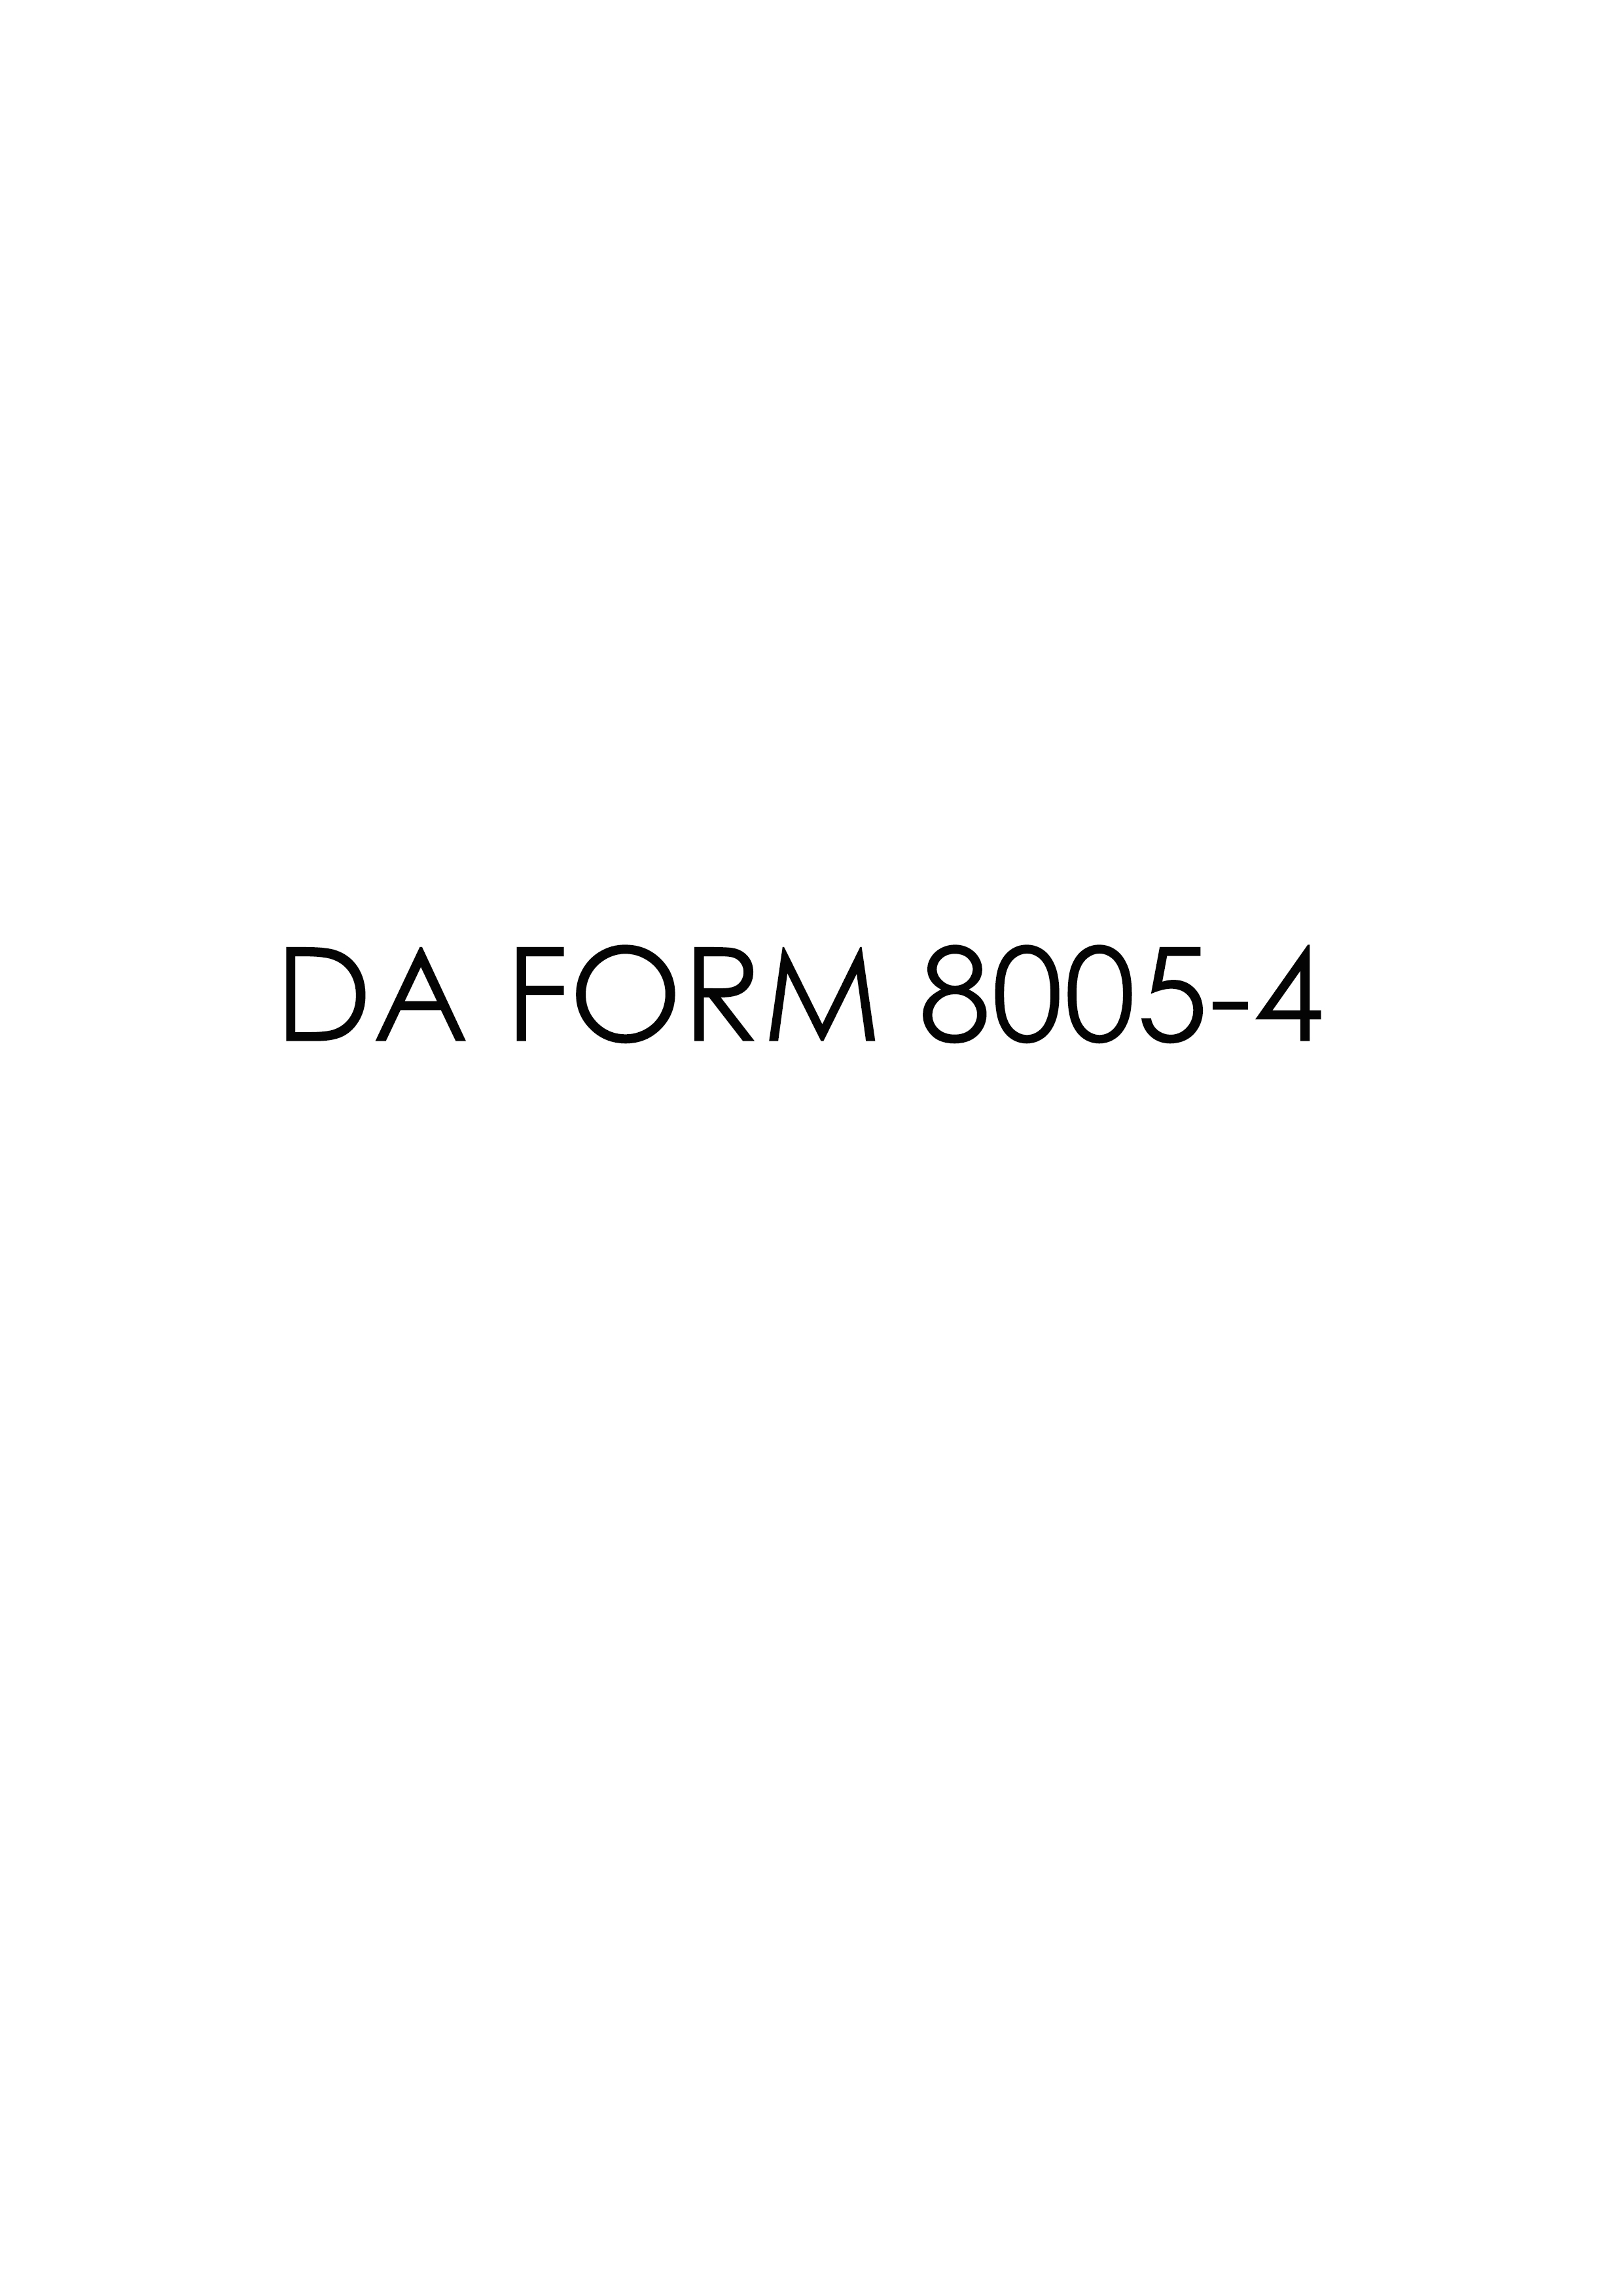 Download da 8005-4 Form